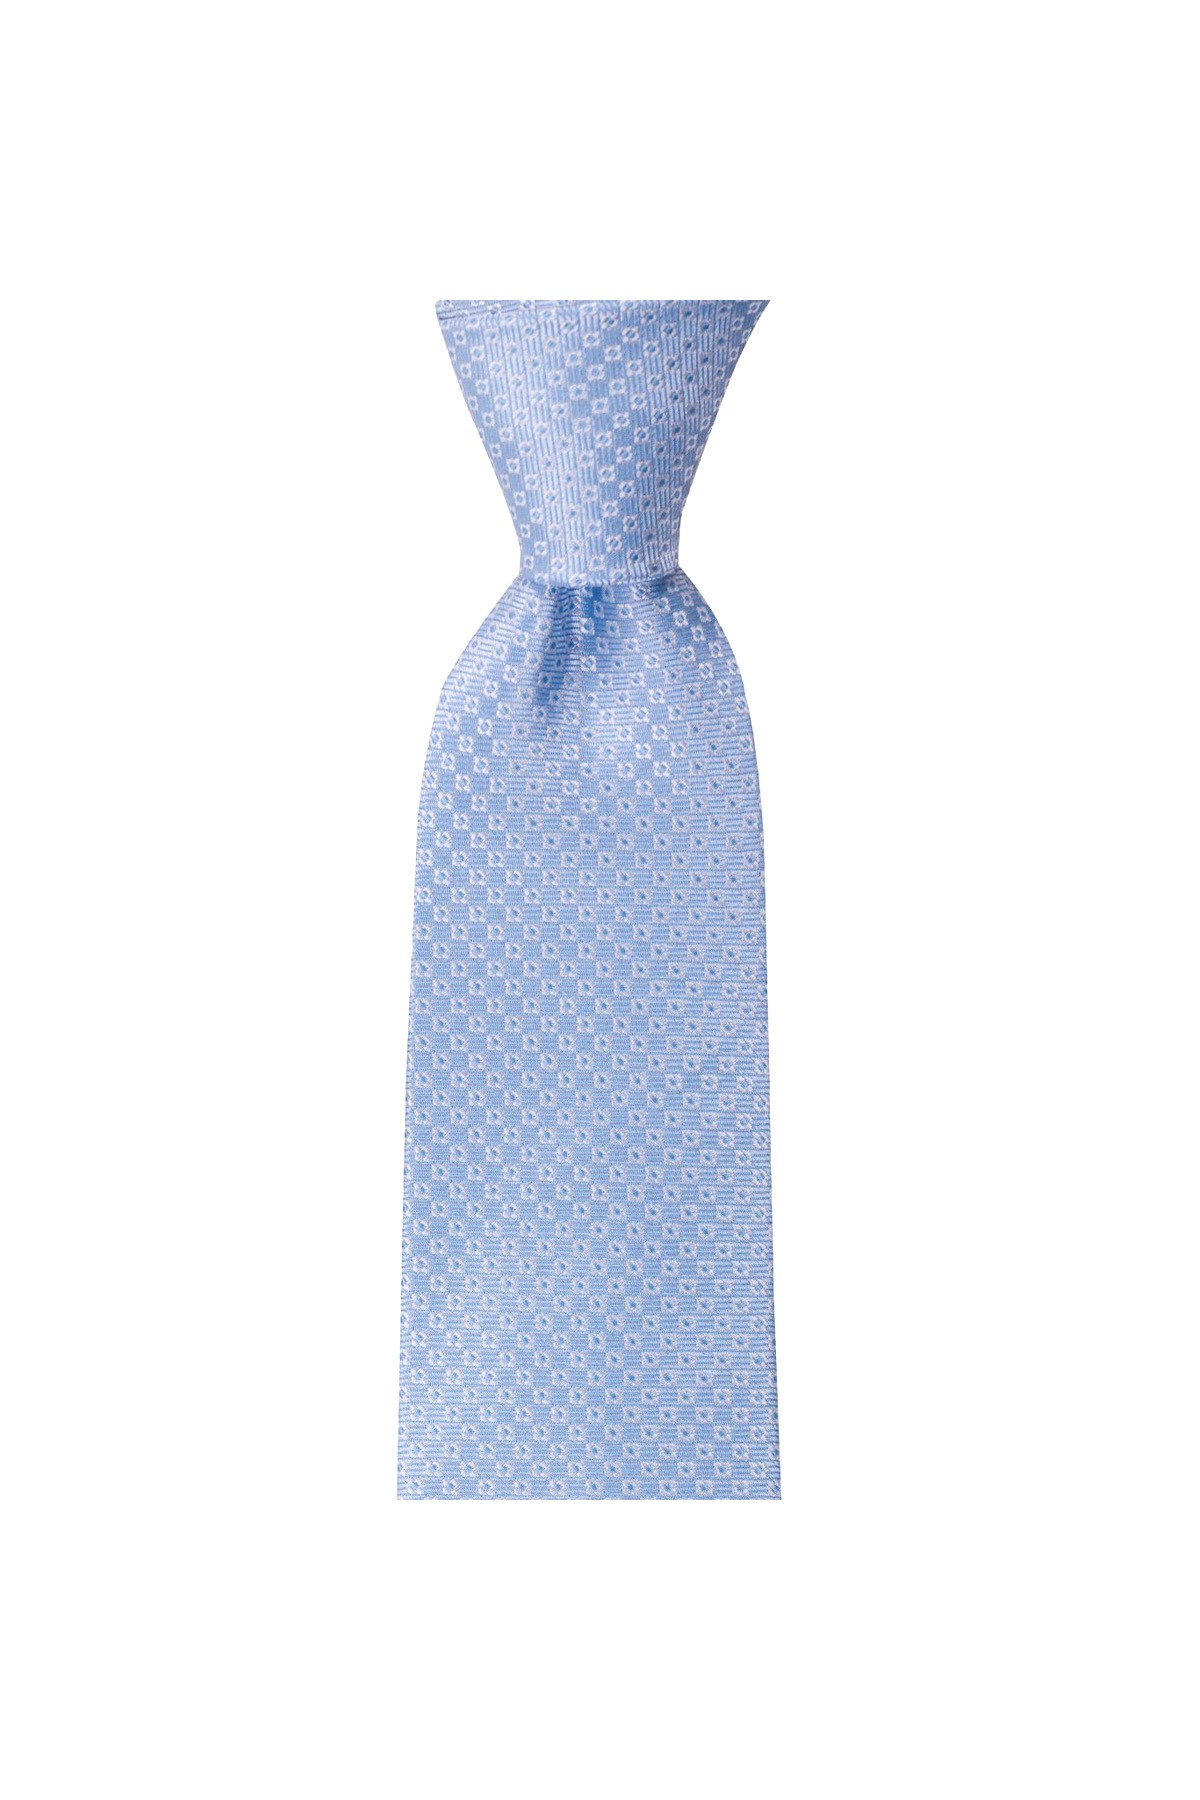 Düz renkli 8 cm genişliğinde mendilli kravat